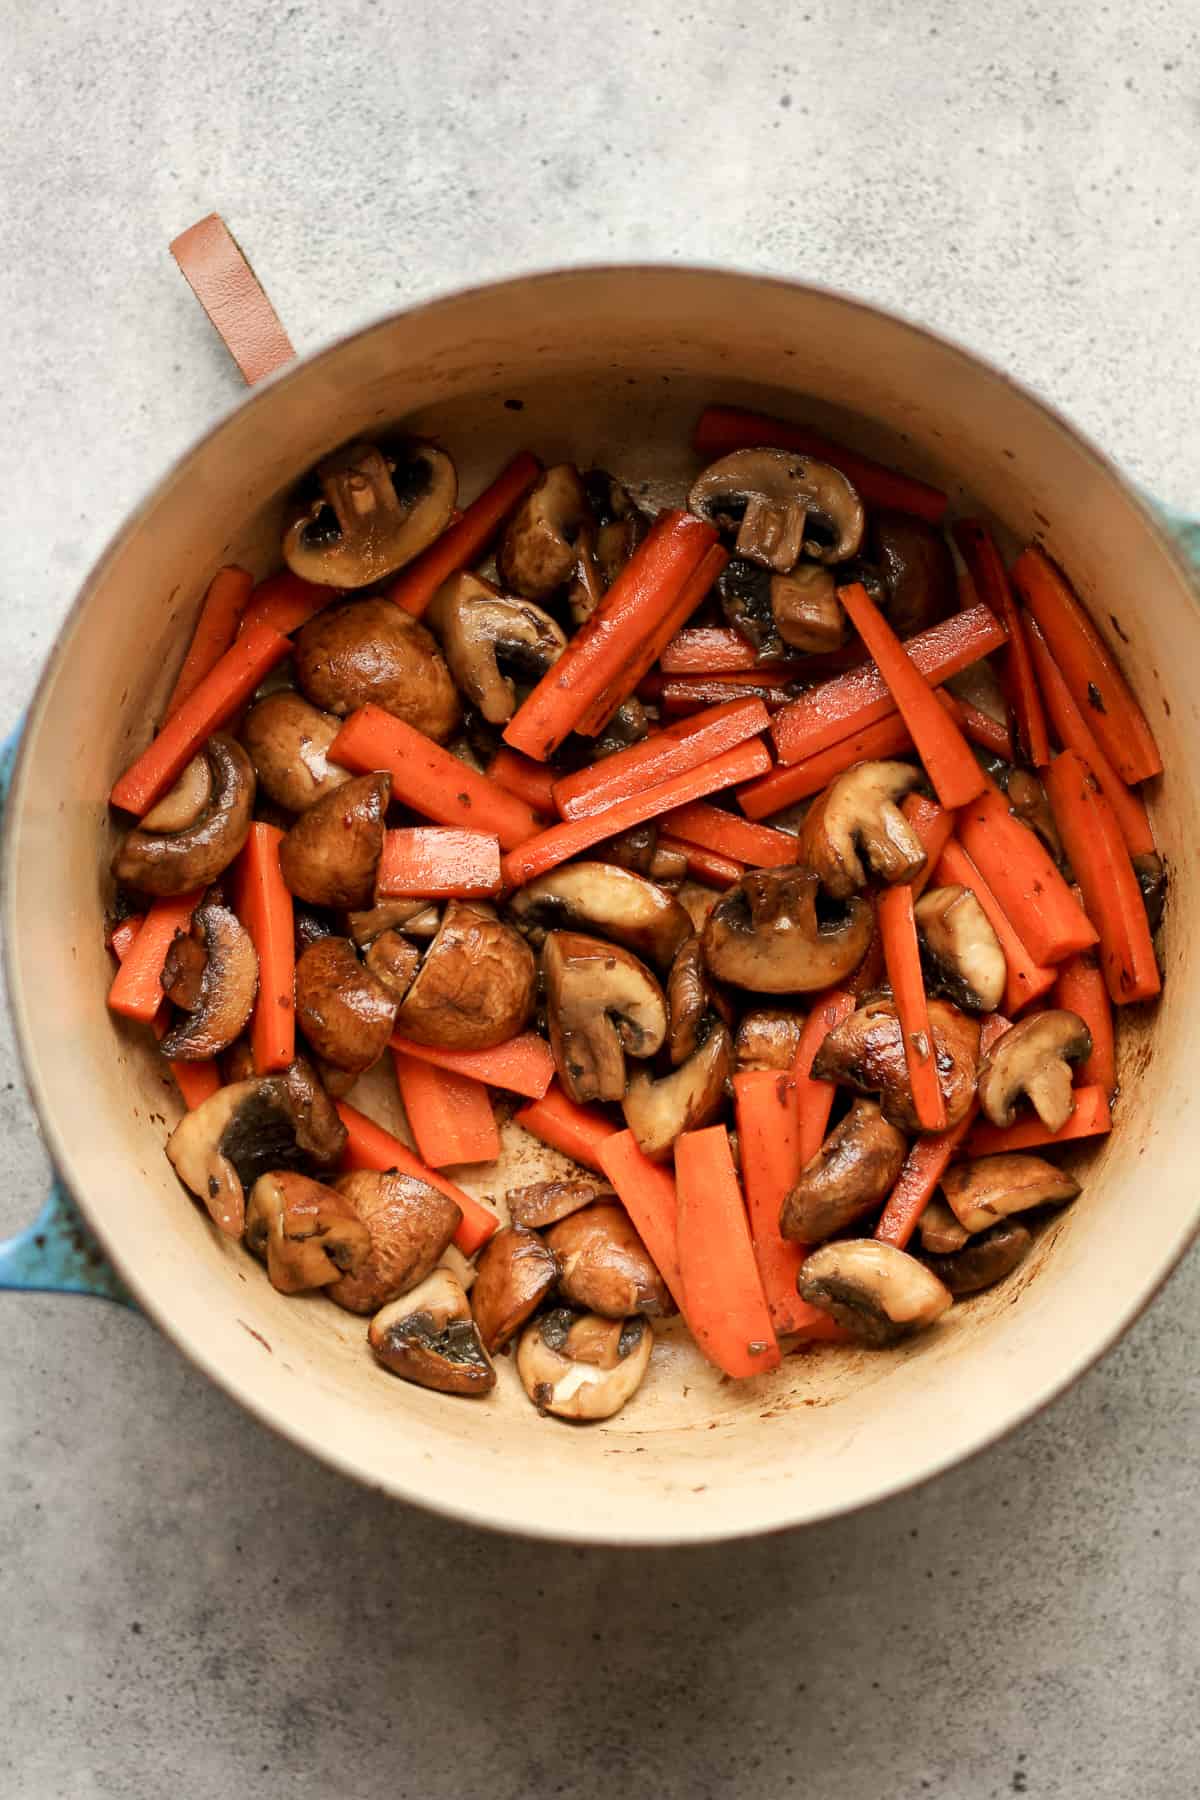 A pot of the sautéed mushrooms and carrots.